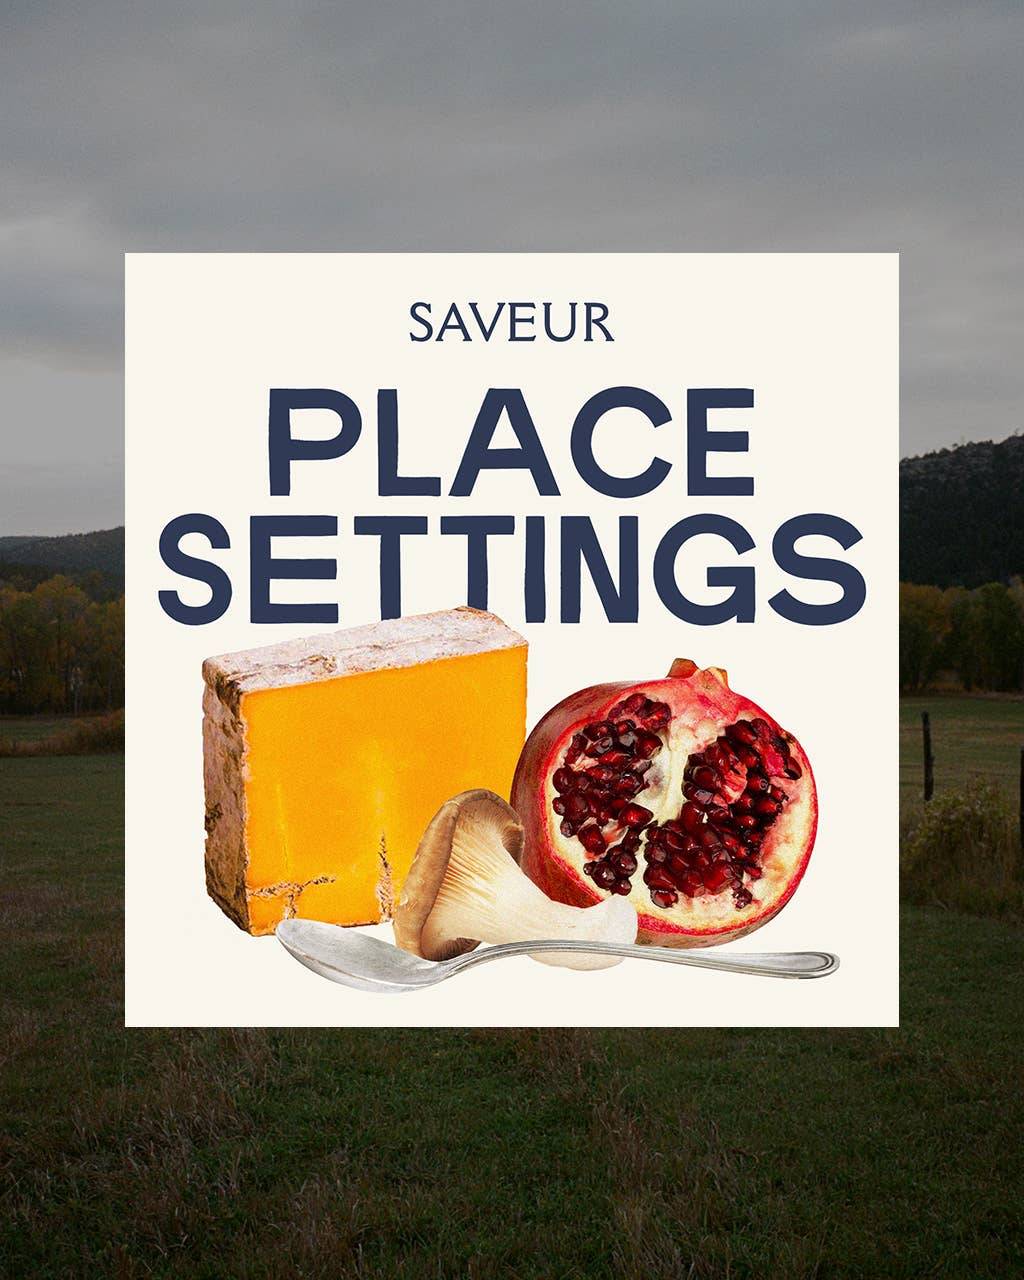 Saveur Place Settings logo